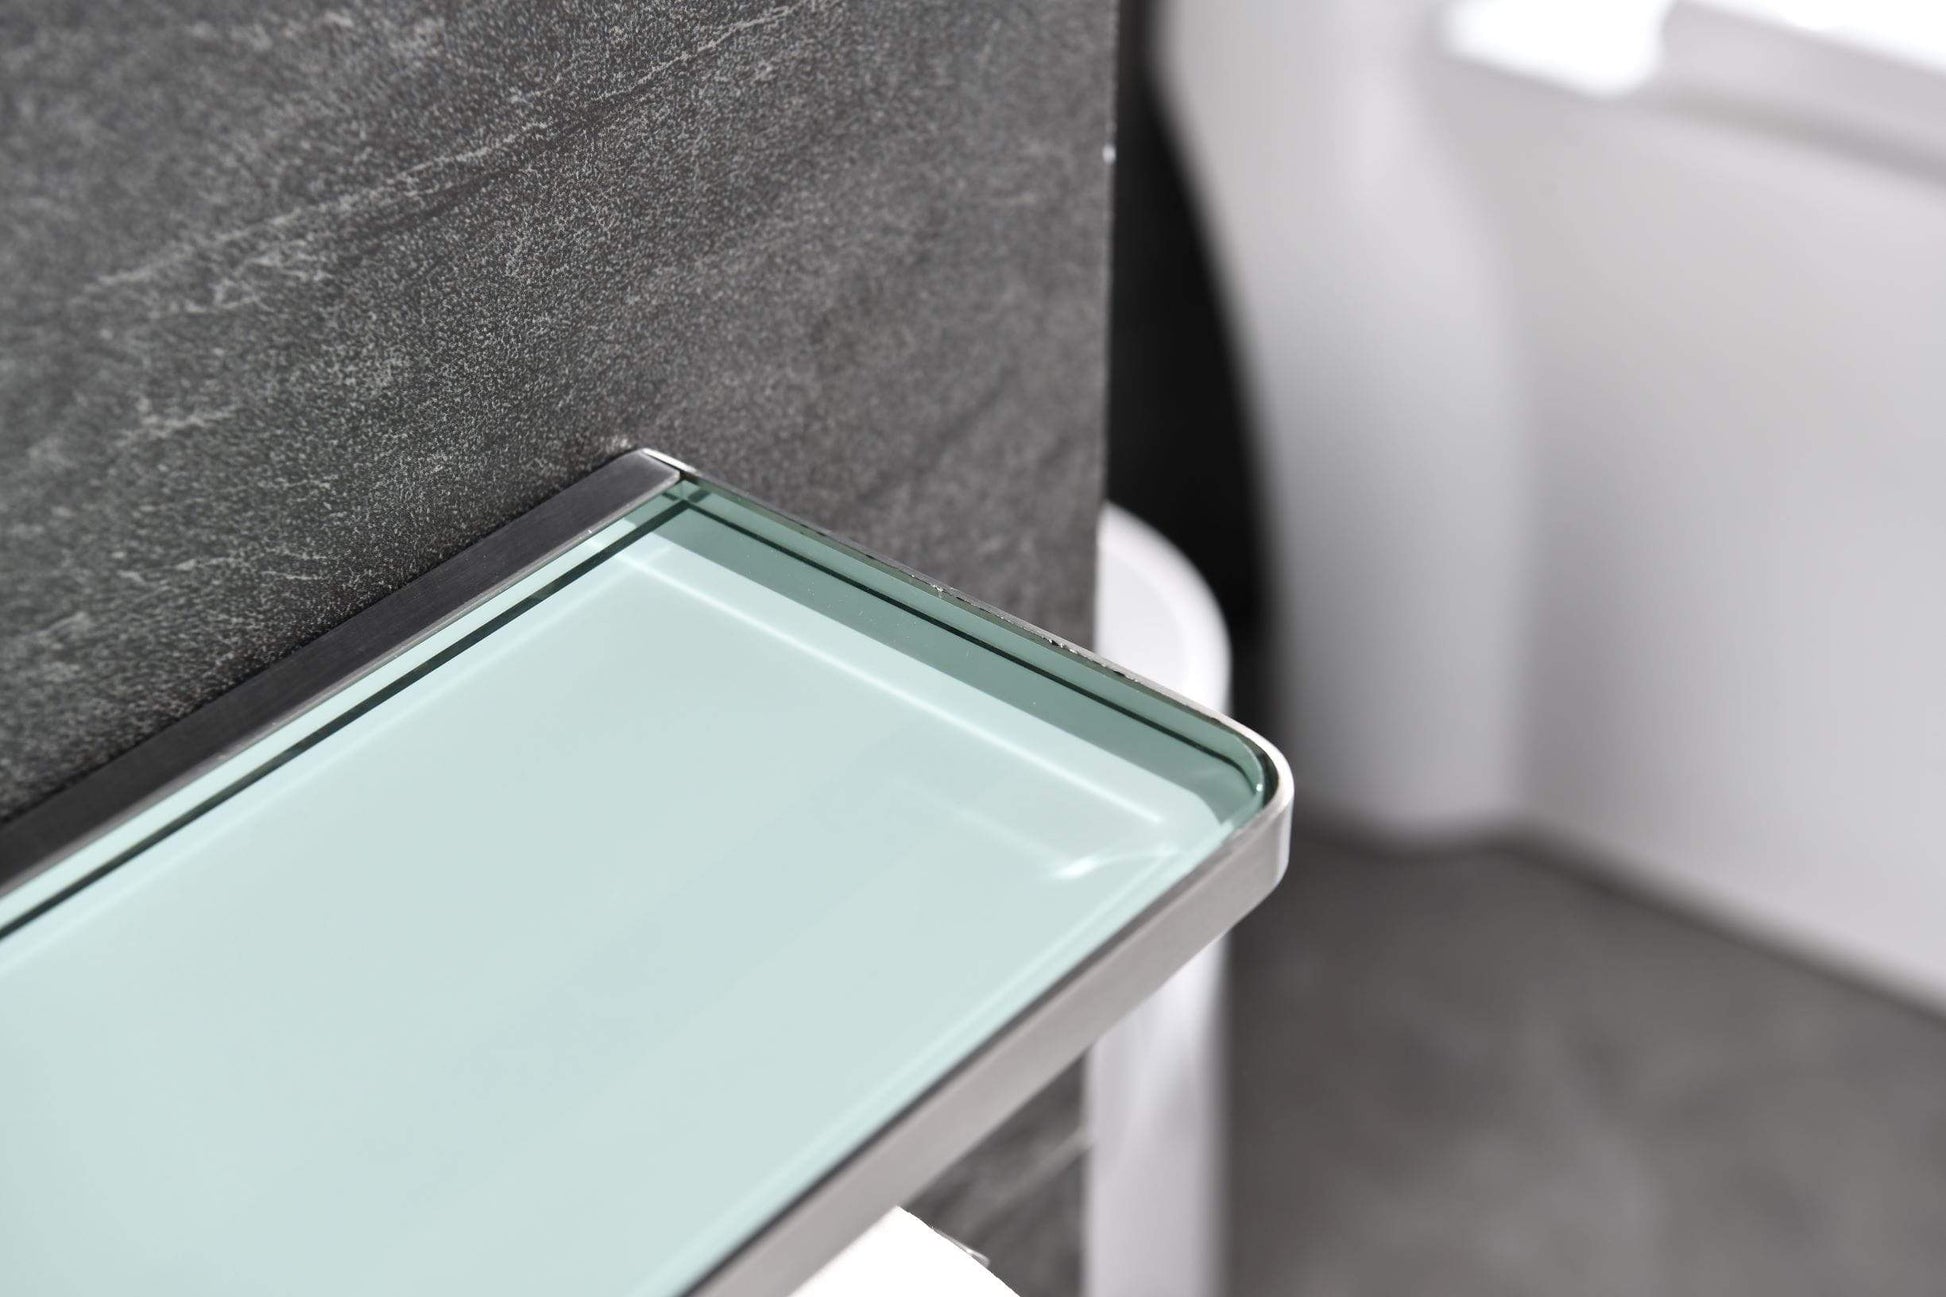 Lexora Bathroom Accessory Set Bagno Bianca Stainless Steel White Glass Shelf w/ Toilet Paper Holder